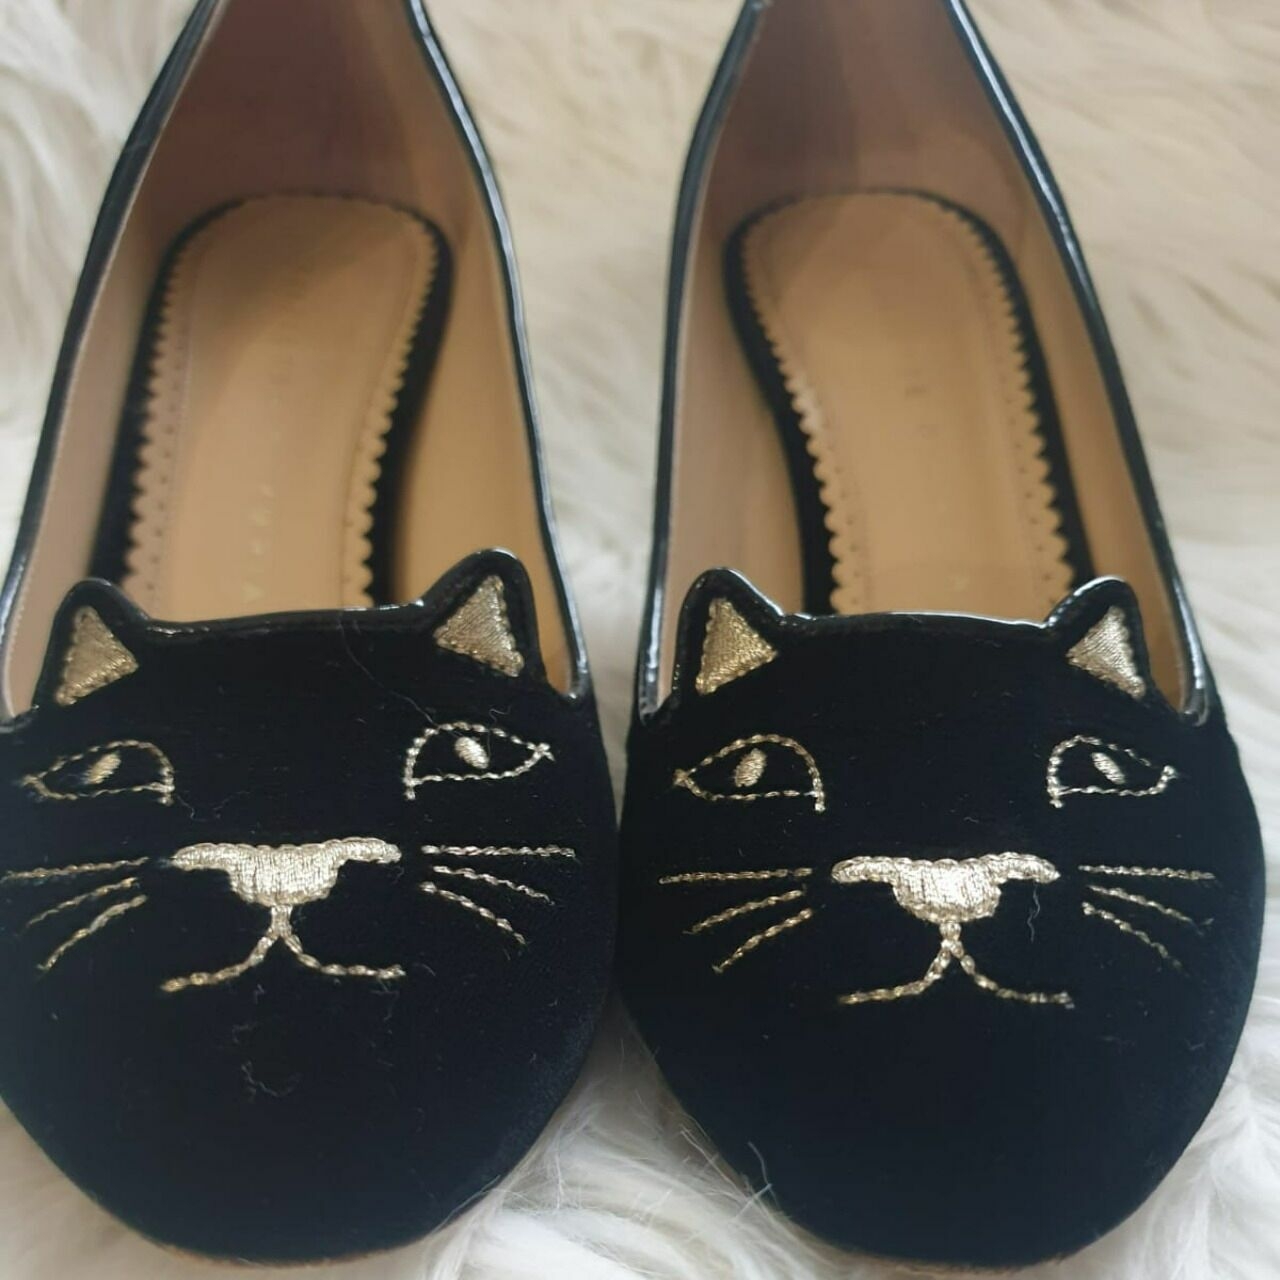 Charlotte Olympia Black Kitty Cat Pumps